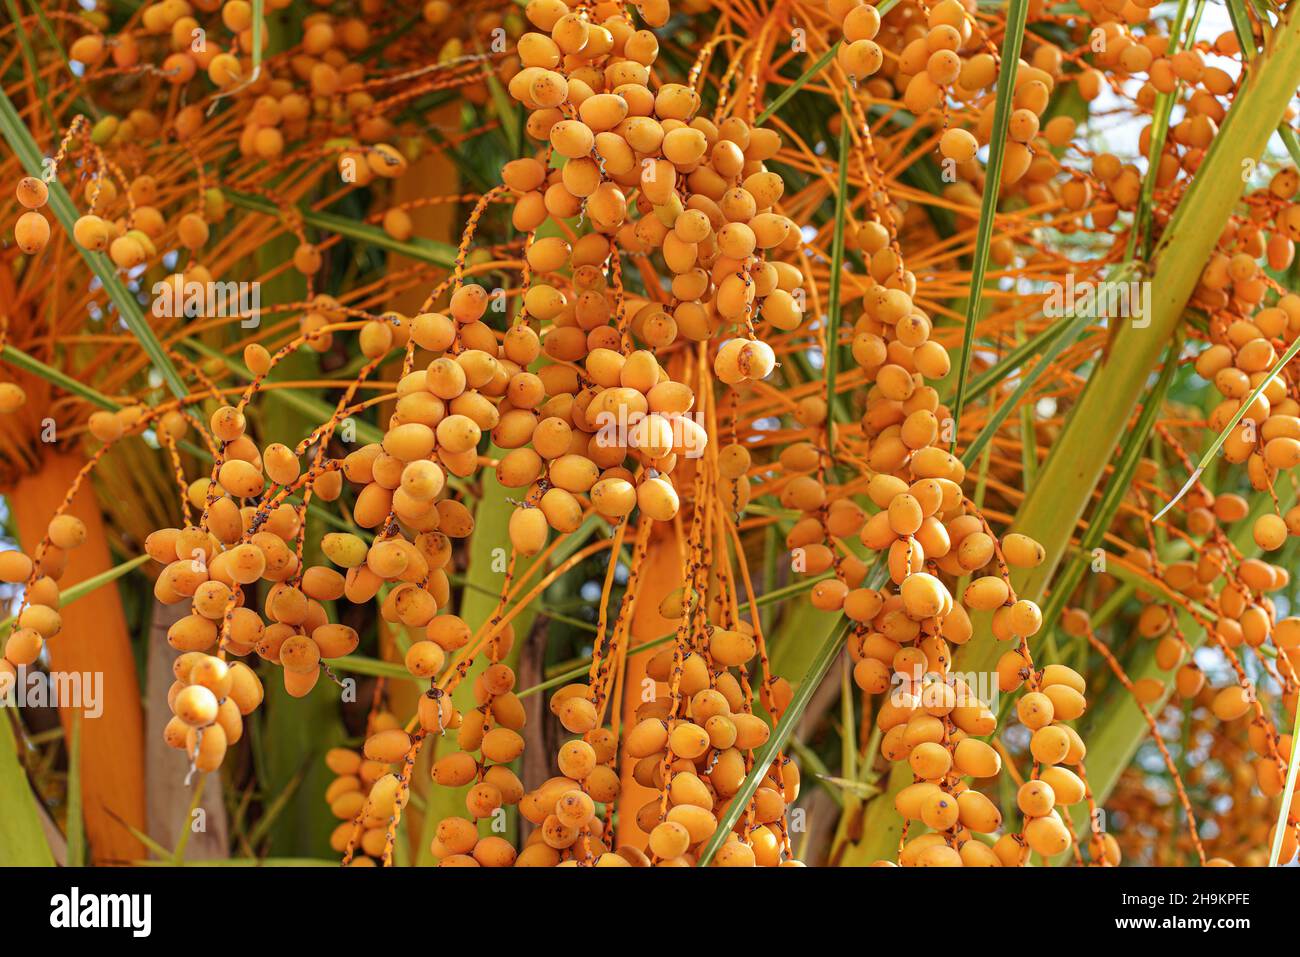 Pindo jelly palm tree (butia capitata) yellow fruits, closeup detail Stock Photo